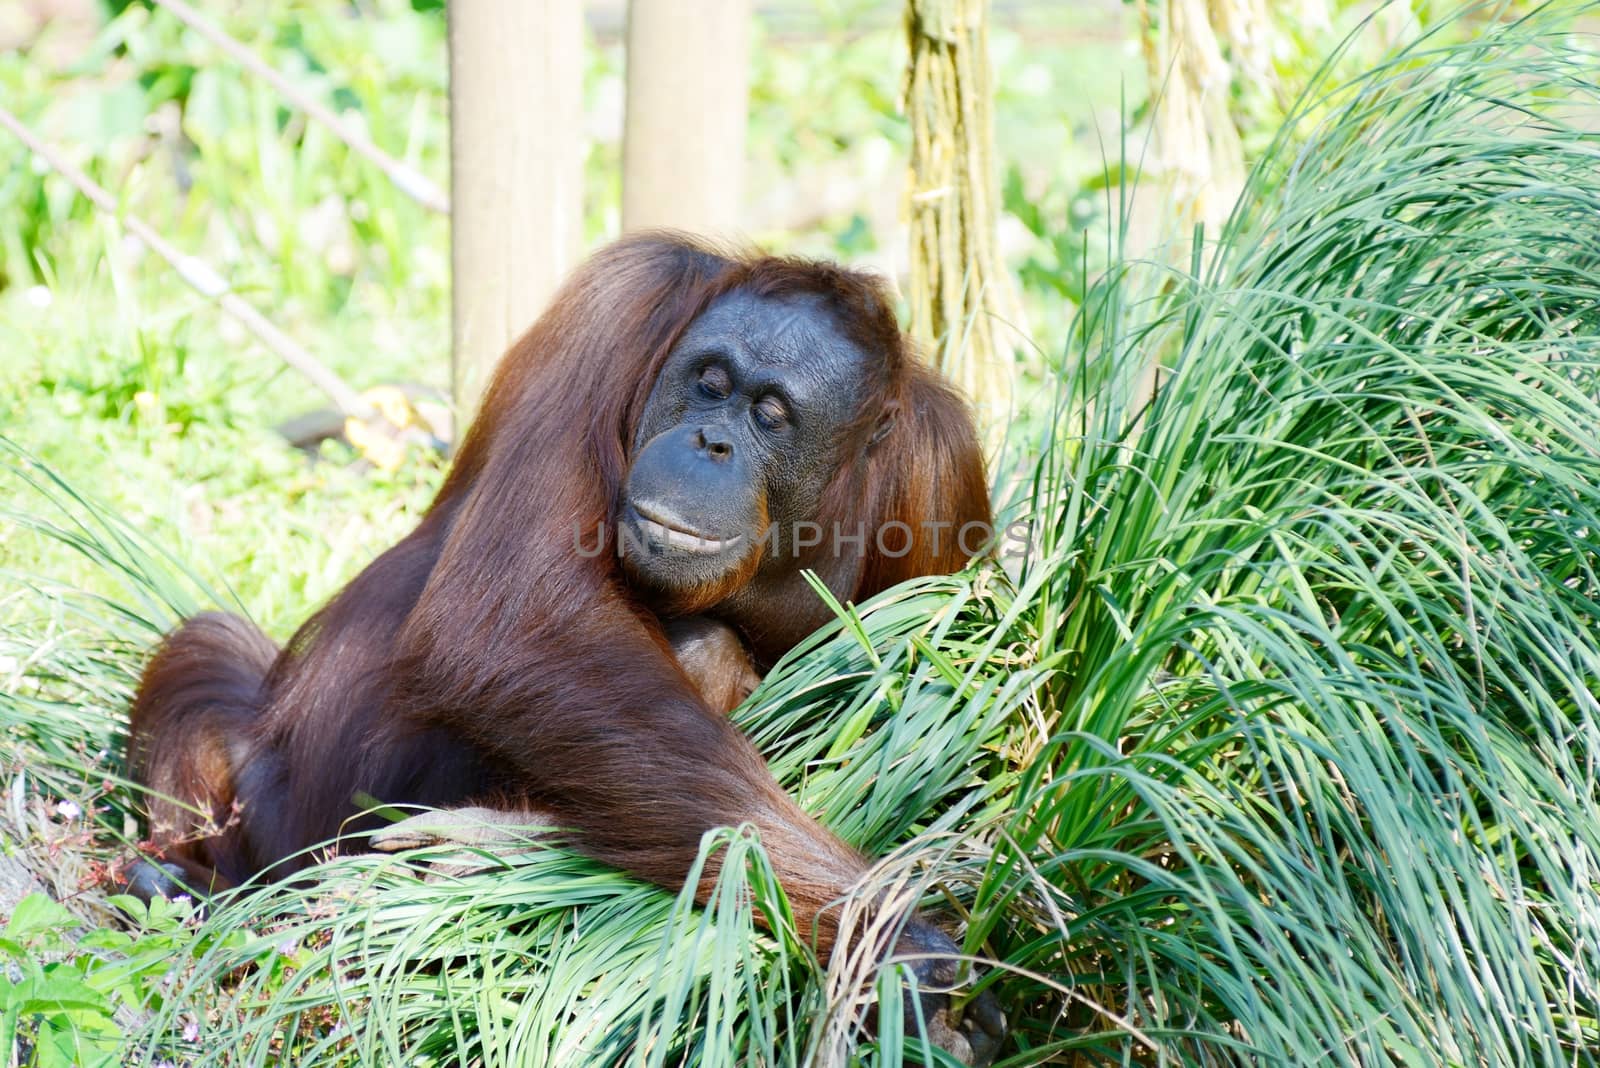 Orangutan mother by kmwphotography